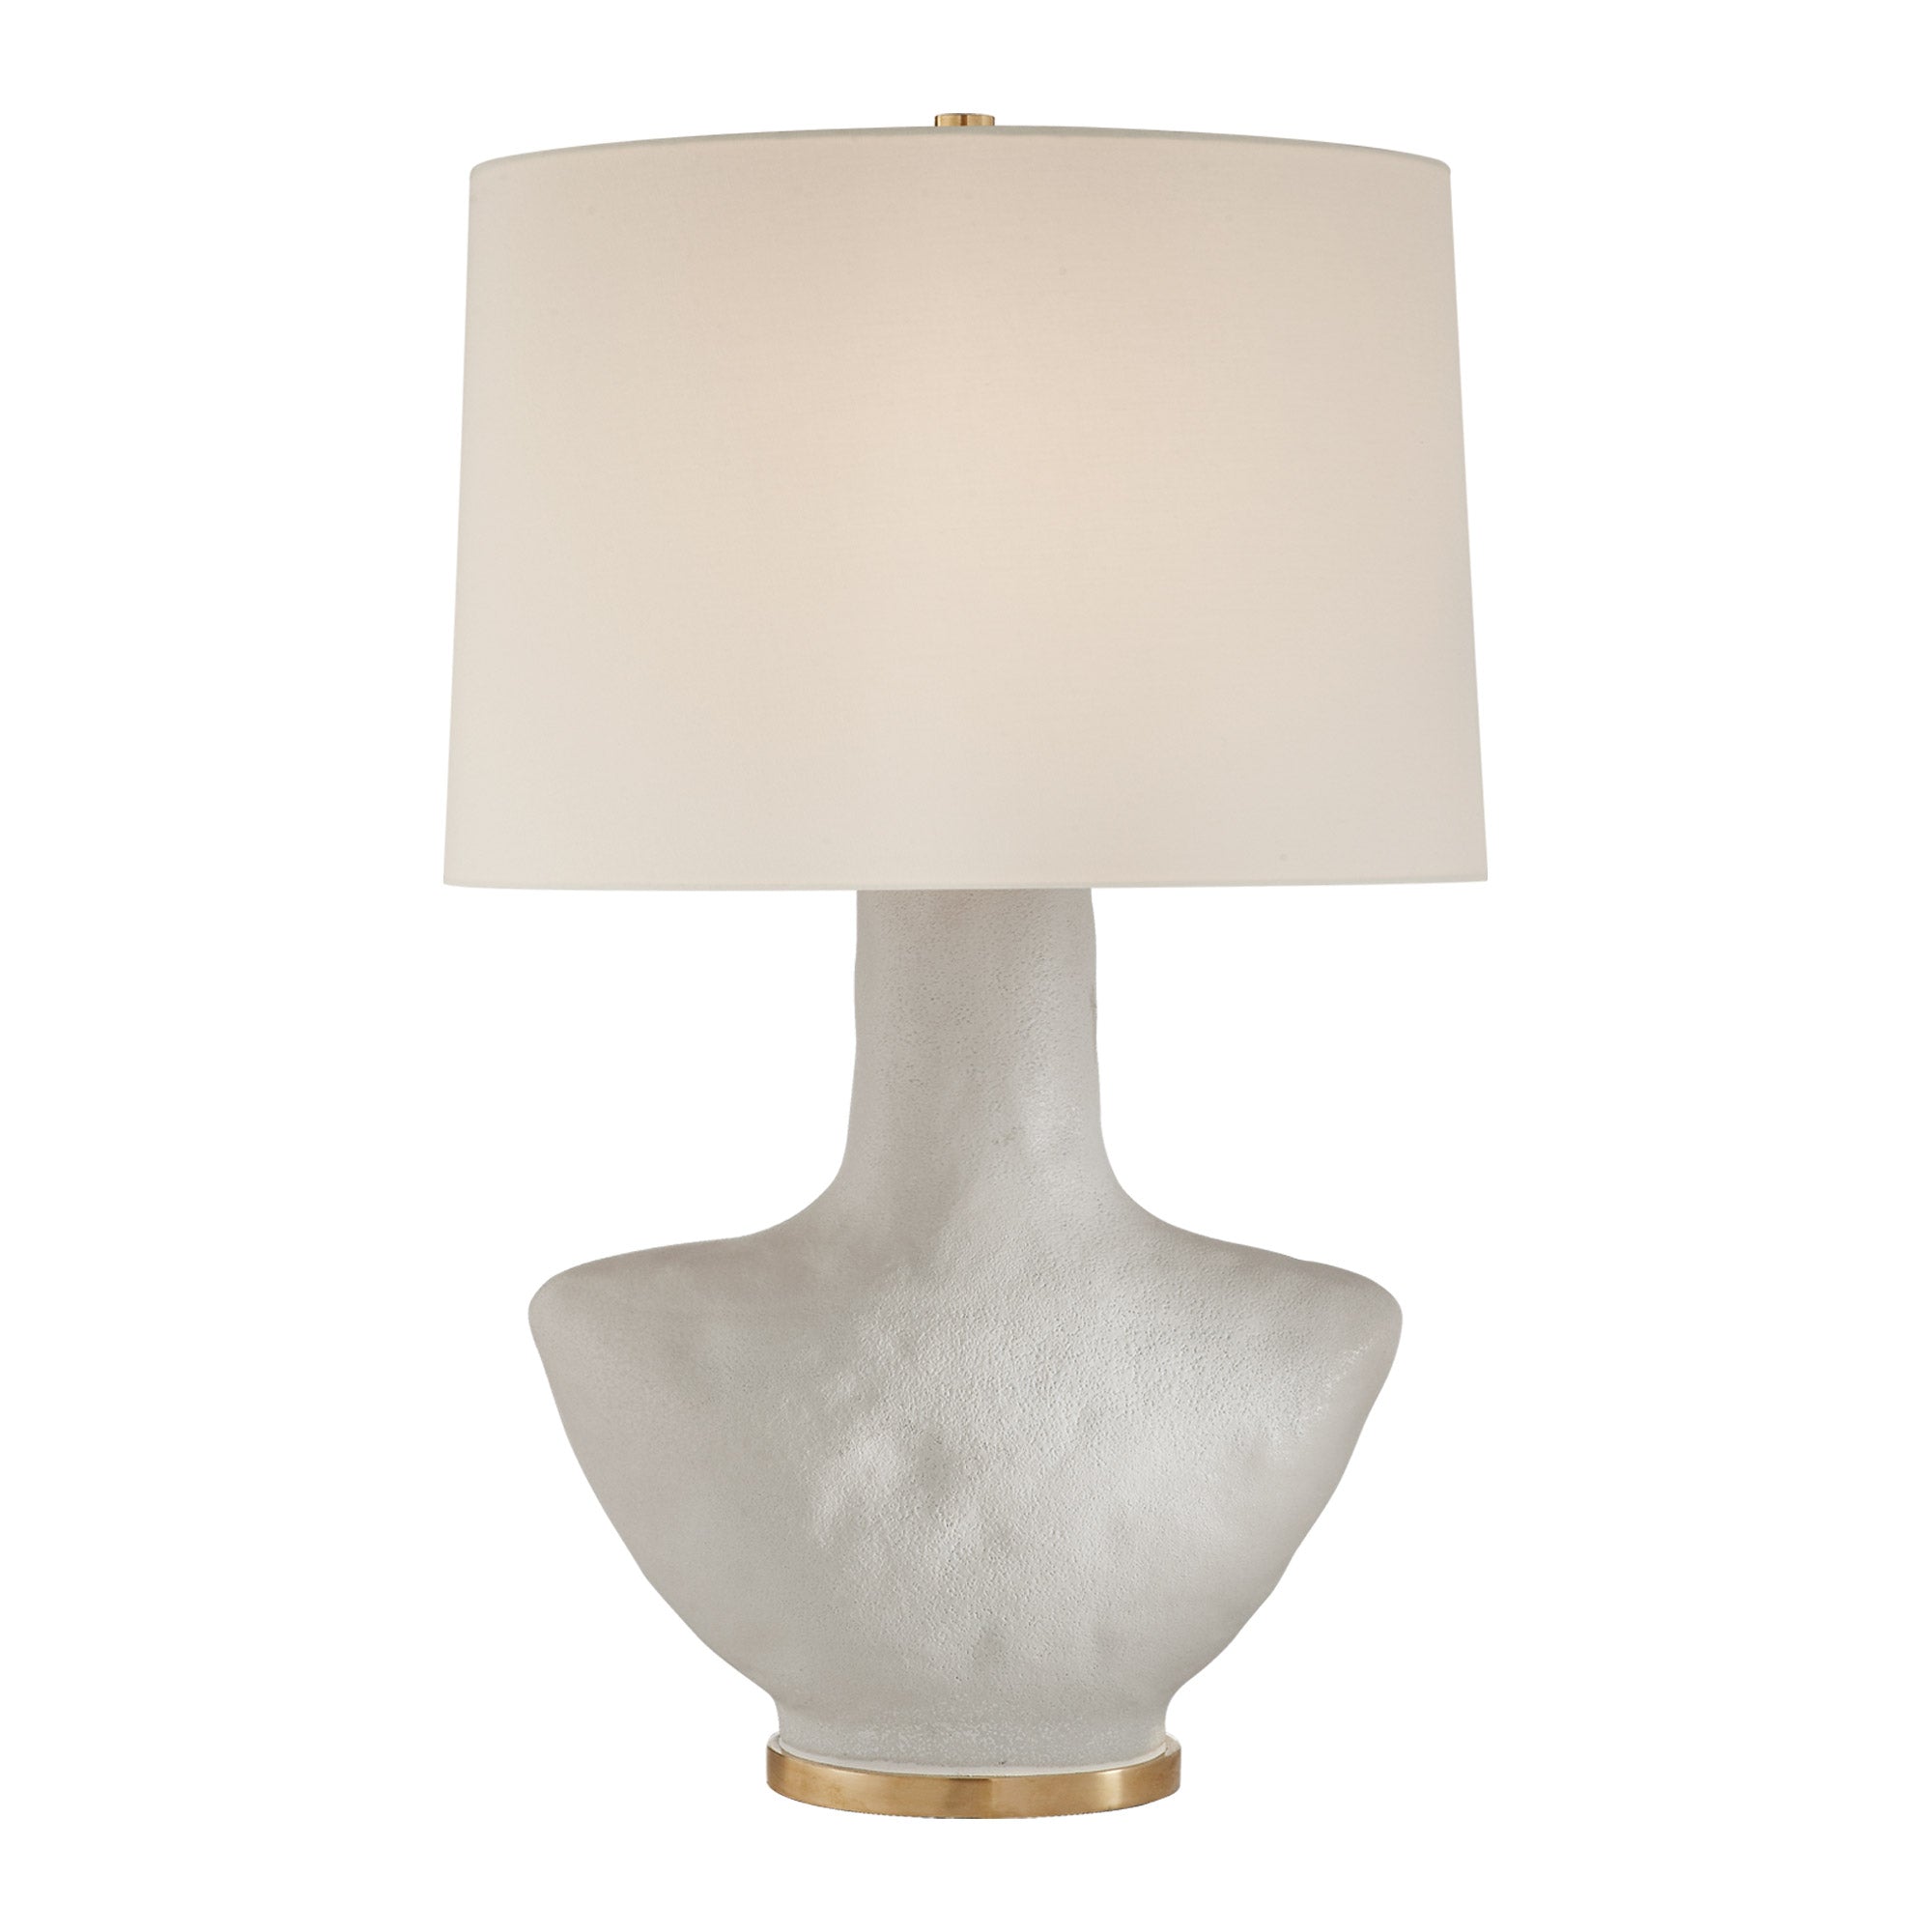 Kelly Wearstler Armato Table Lamp